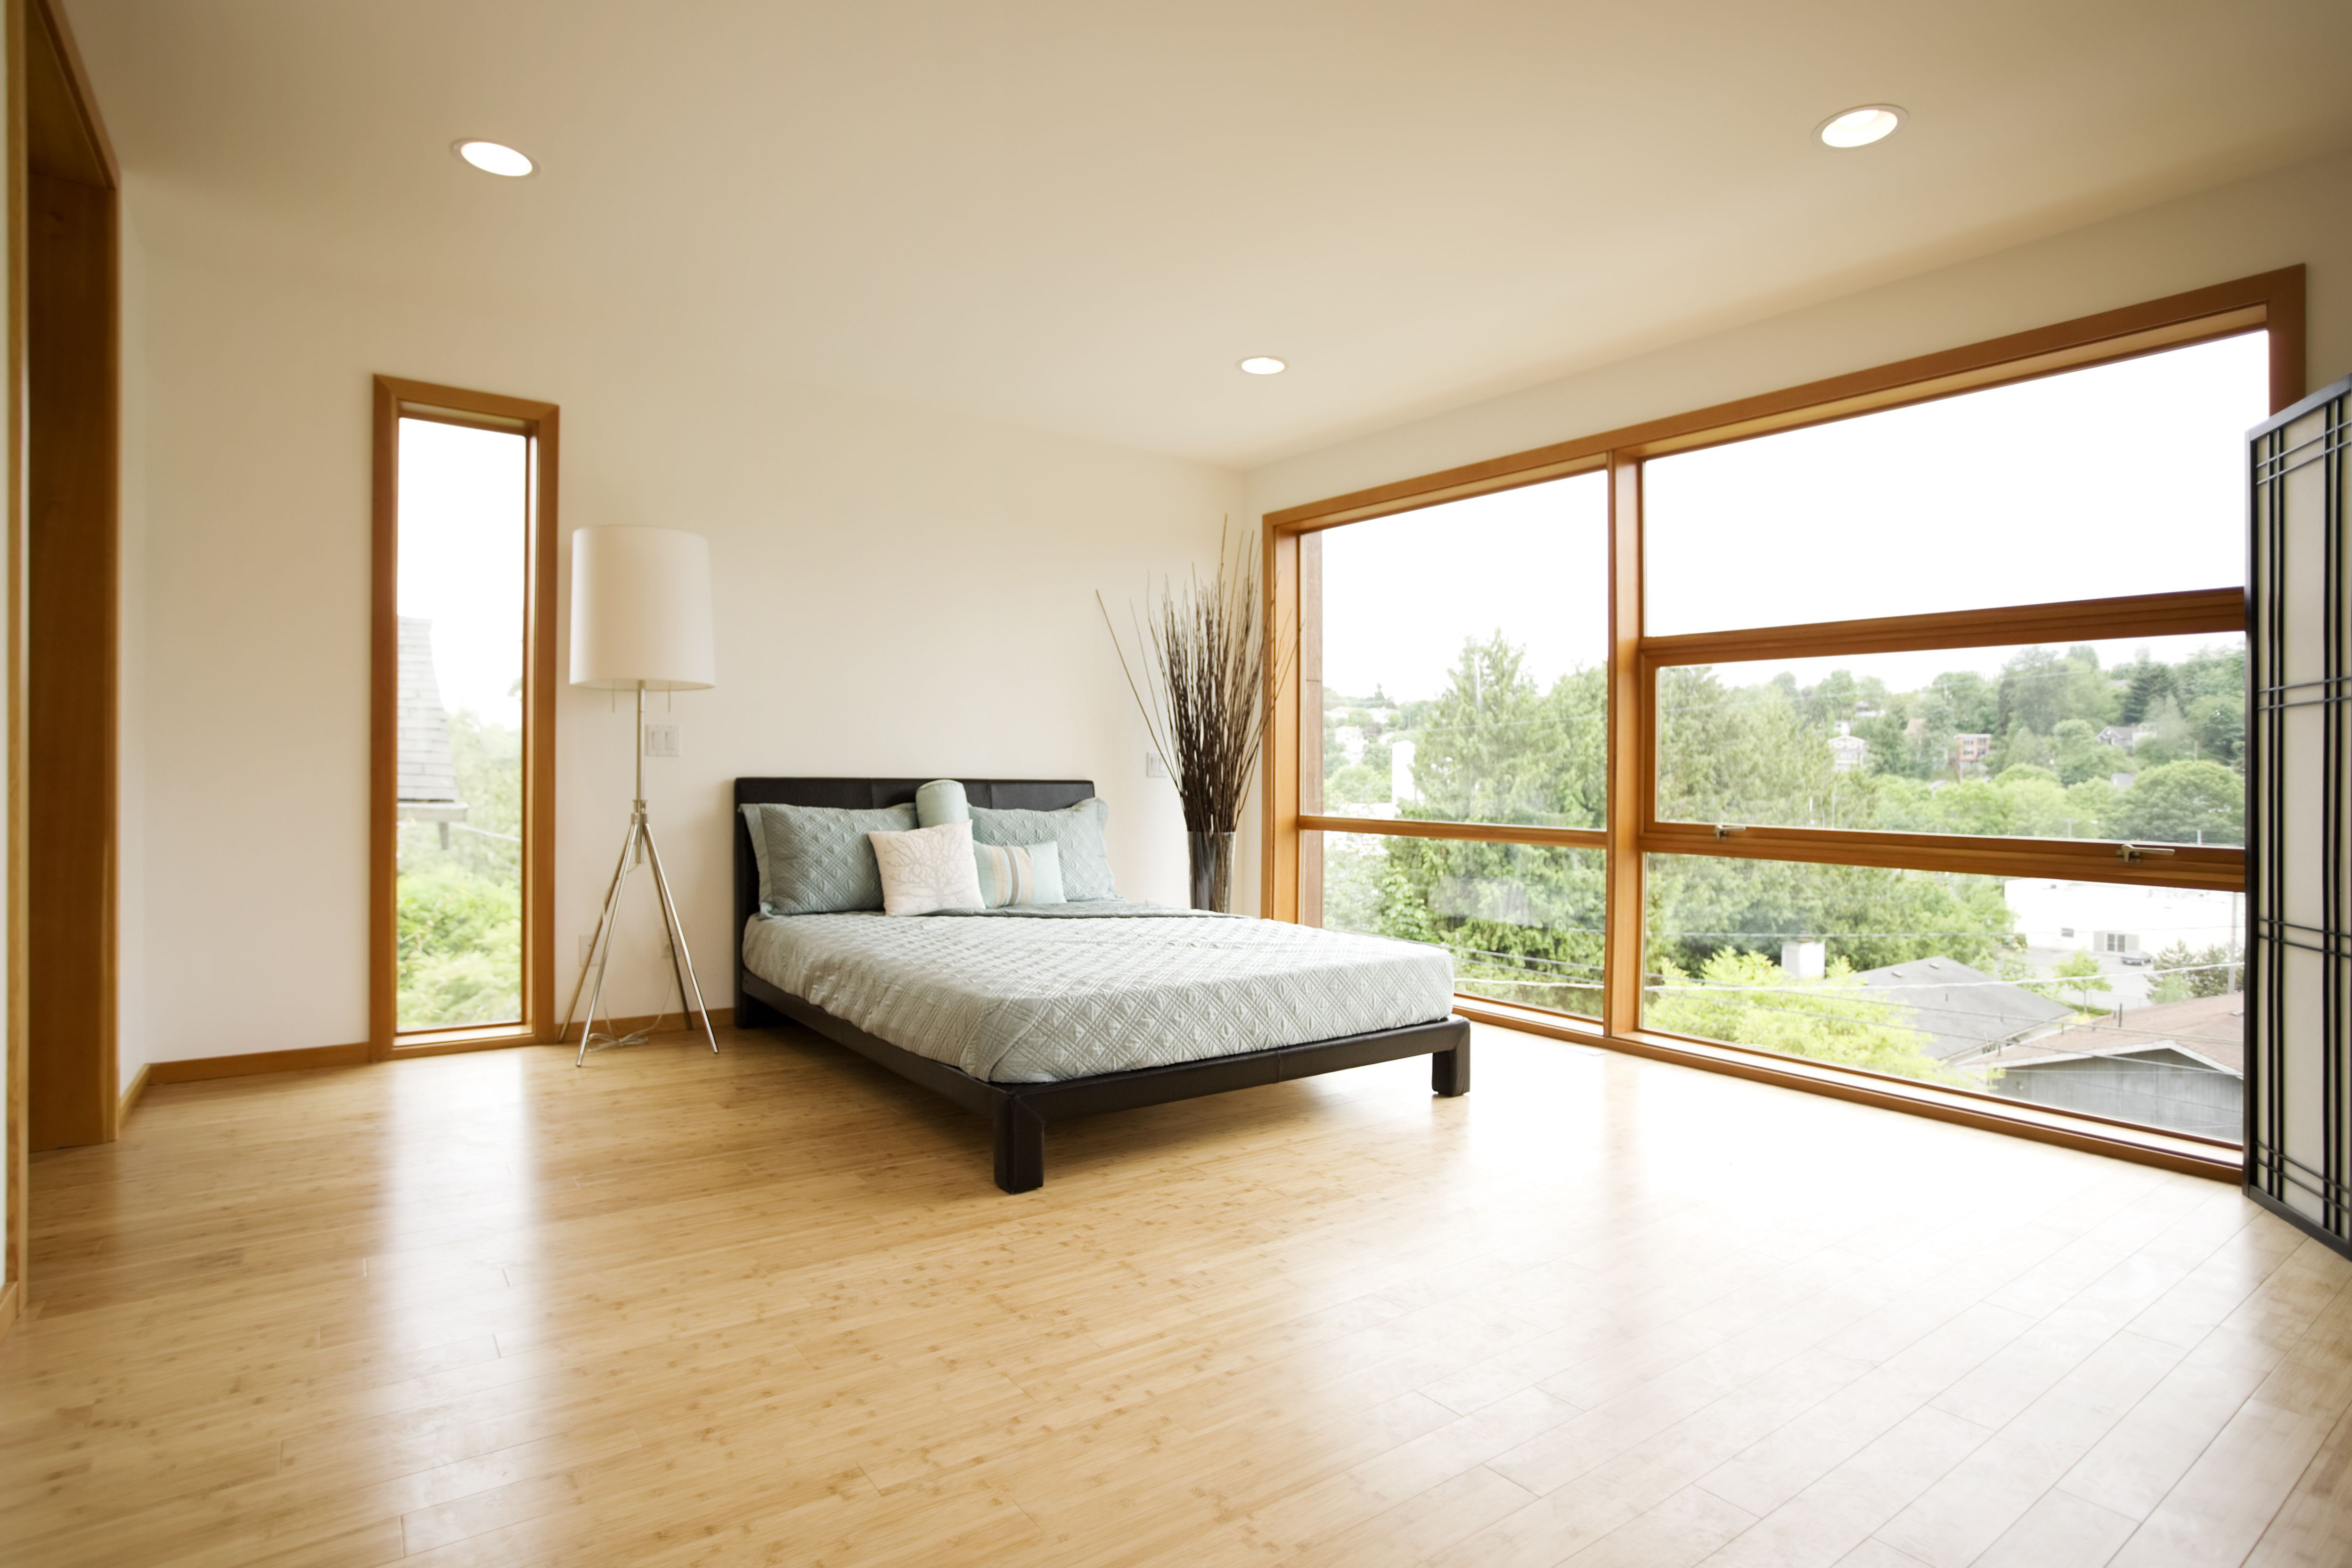 23 Lovable Hardwood Flooring Spokane 2024 free download hardwood flooring spokane of what is strand woven bamboo flooring regarding modern spacious bedroom with hardwood floors 157331055 5a91e49f1f4e1300364a5e8b